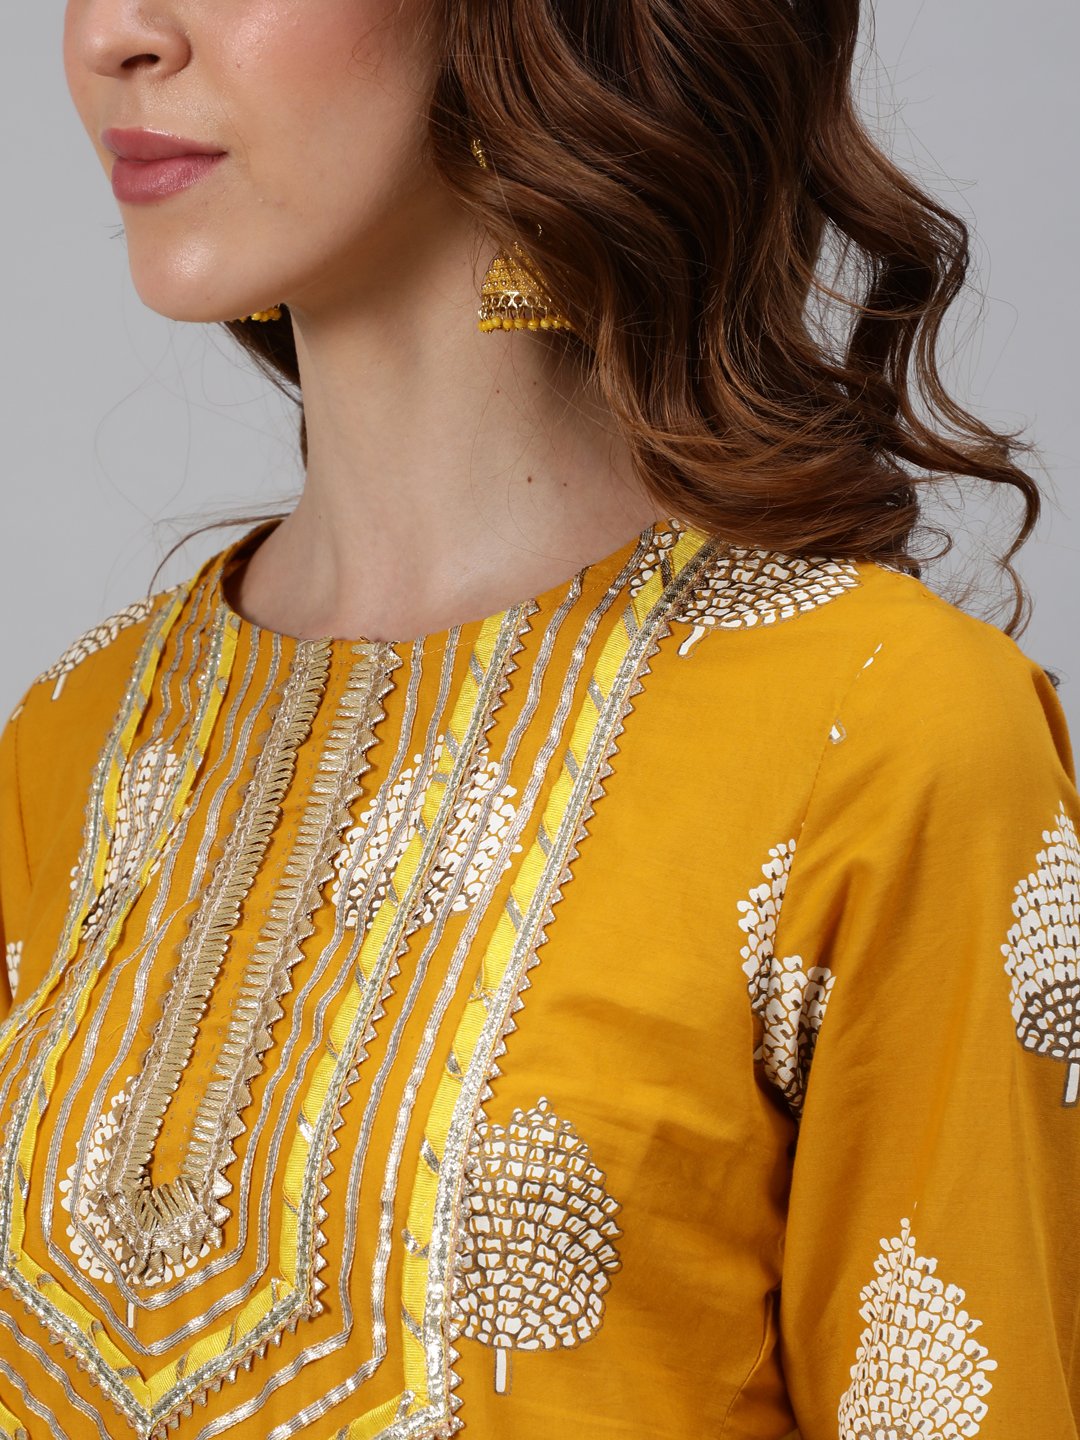 Ishin Women's Cotton Mustard Embroidered A-Line Kurta Sharara Dupatta Set